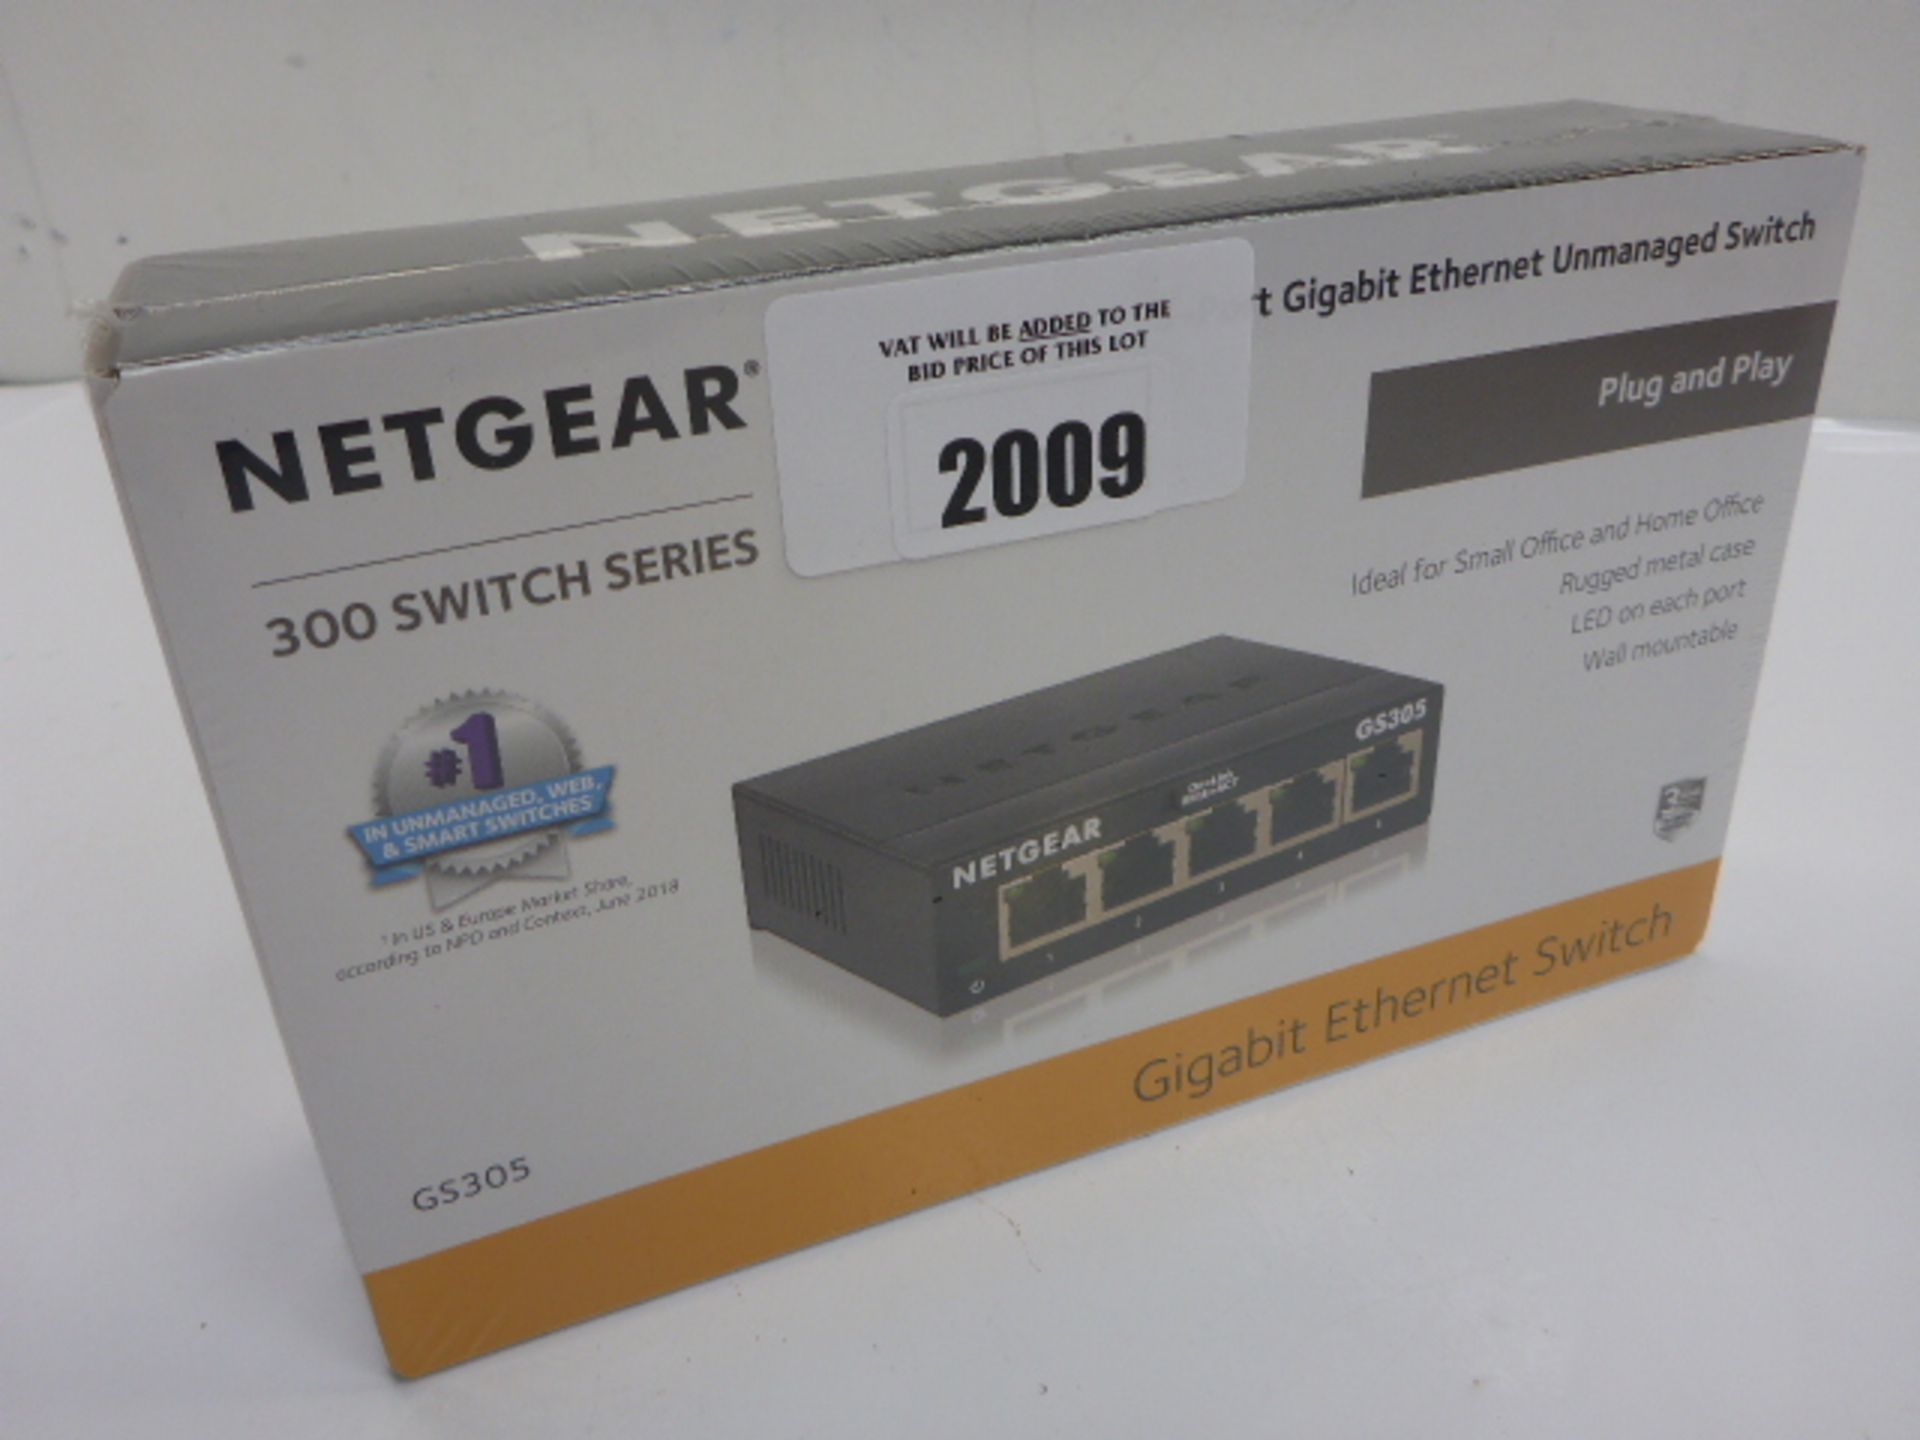 Netgear 5 port Gigabit ethernet unmanaged switch. Model GS305 in sealed box